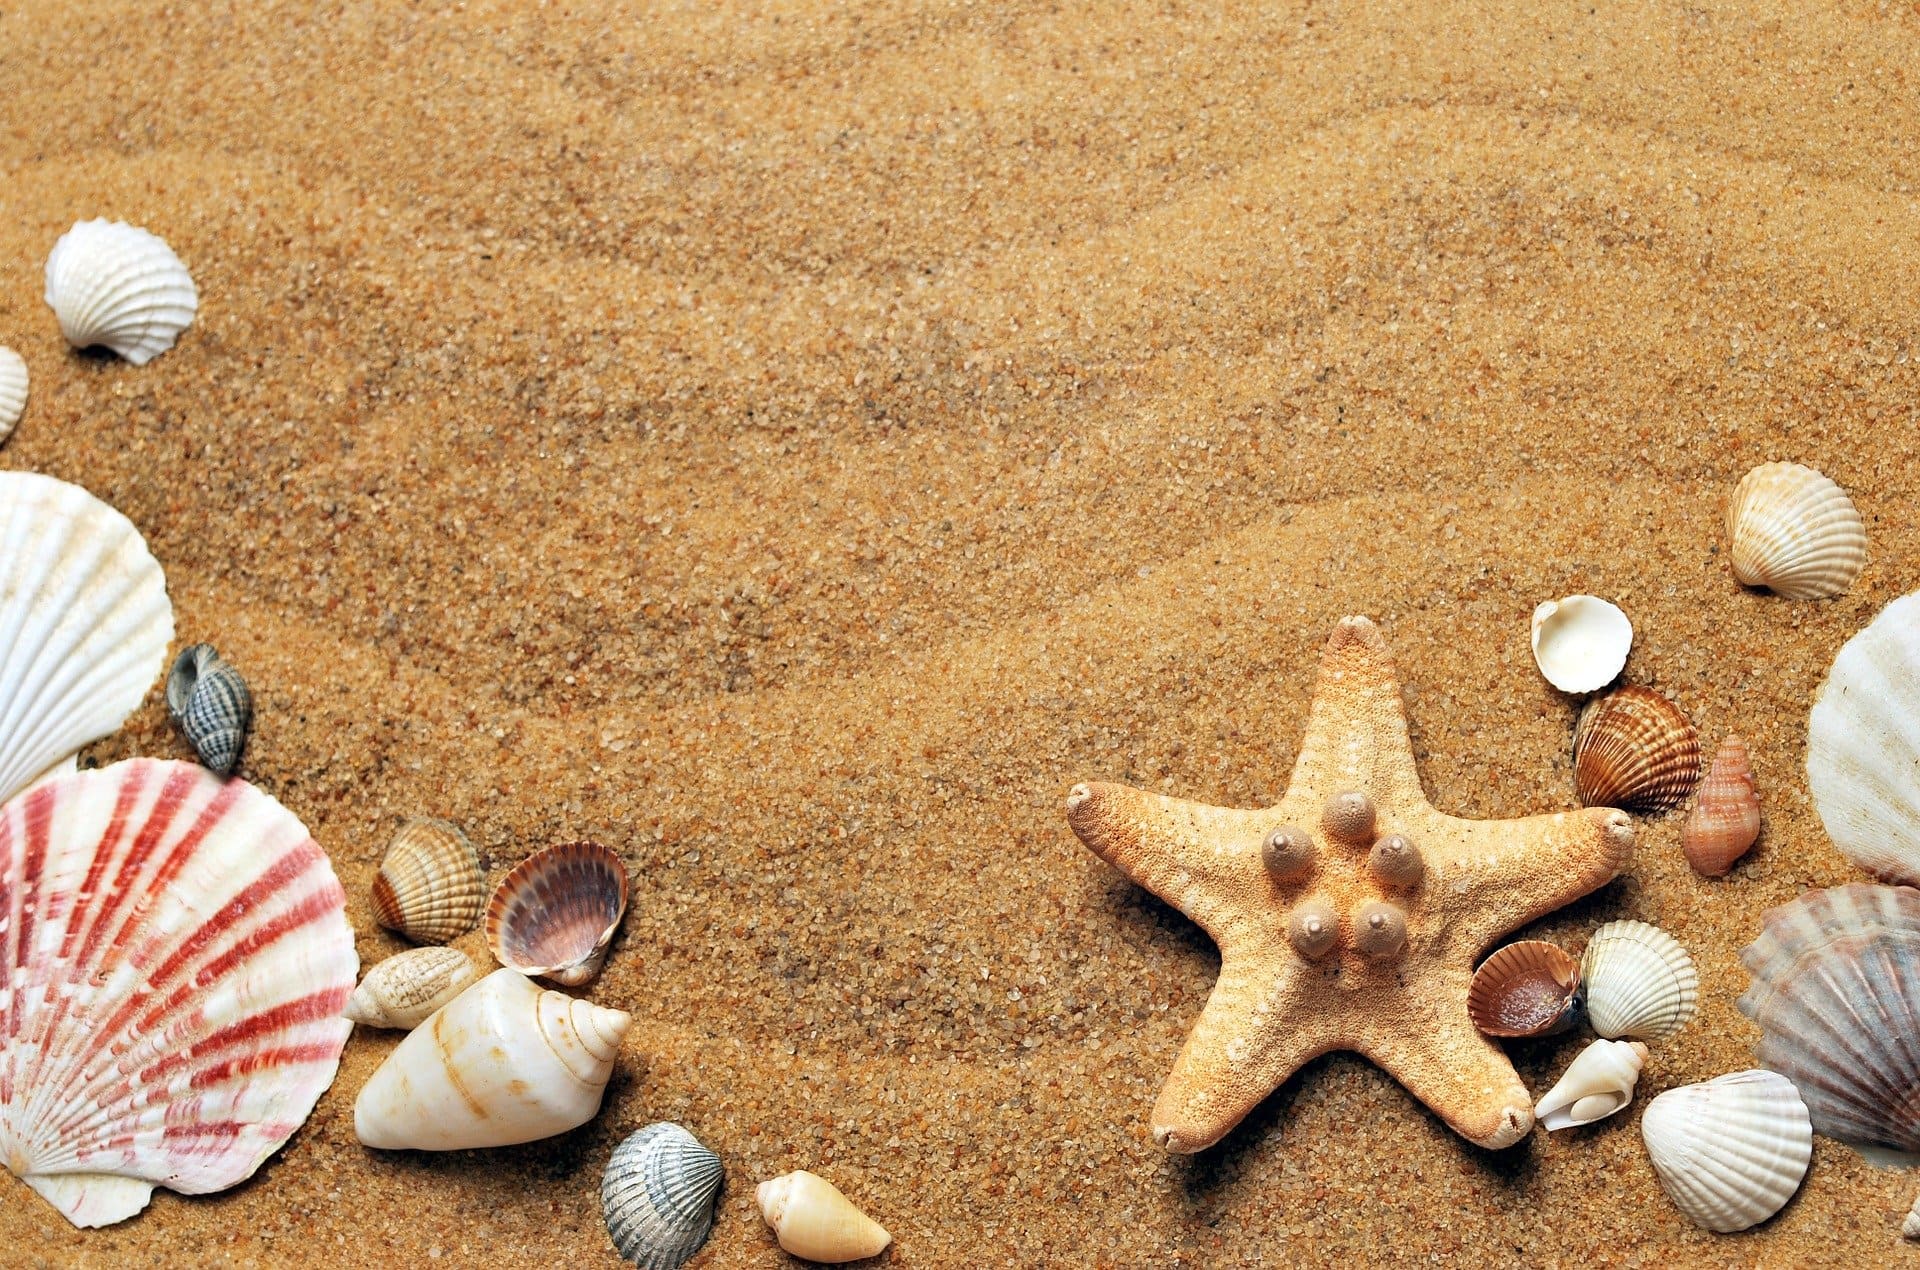 Seashells on sand | Source: Pixabay